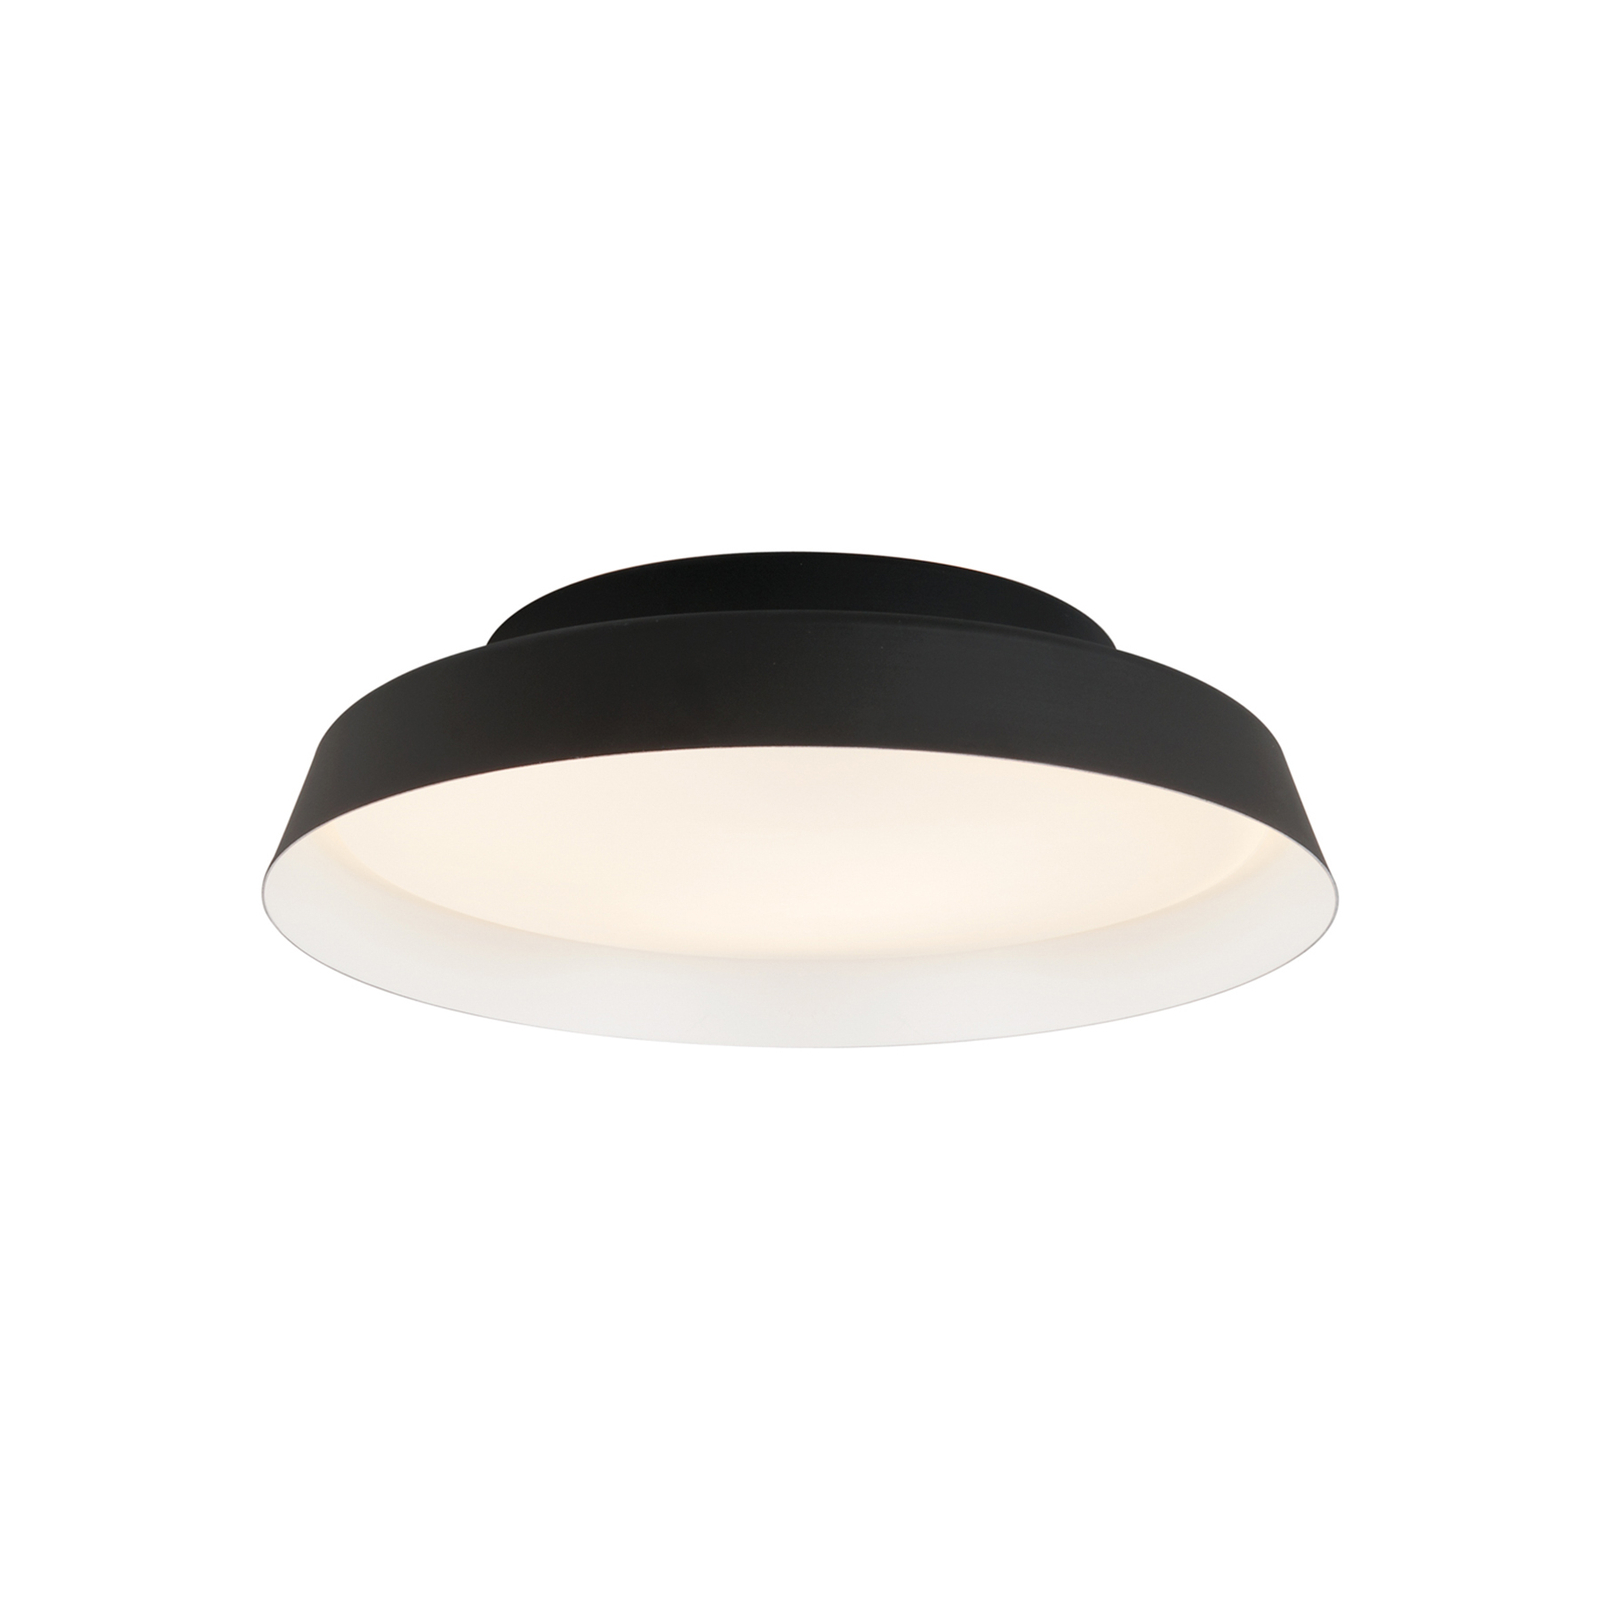 LED plafondlamp Boop! Ø37cm zwart/wit